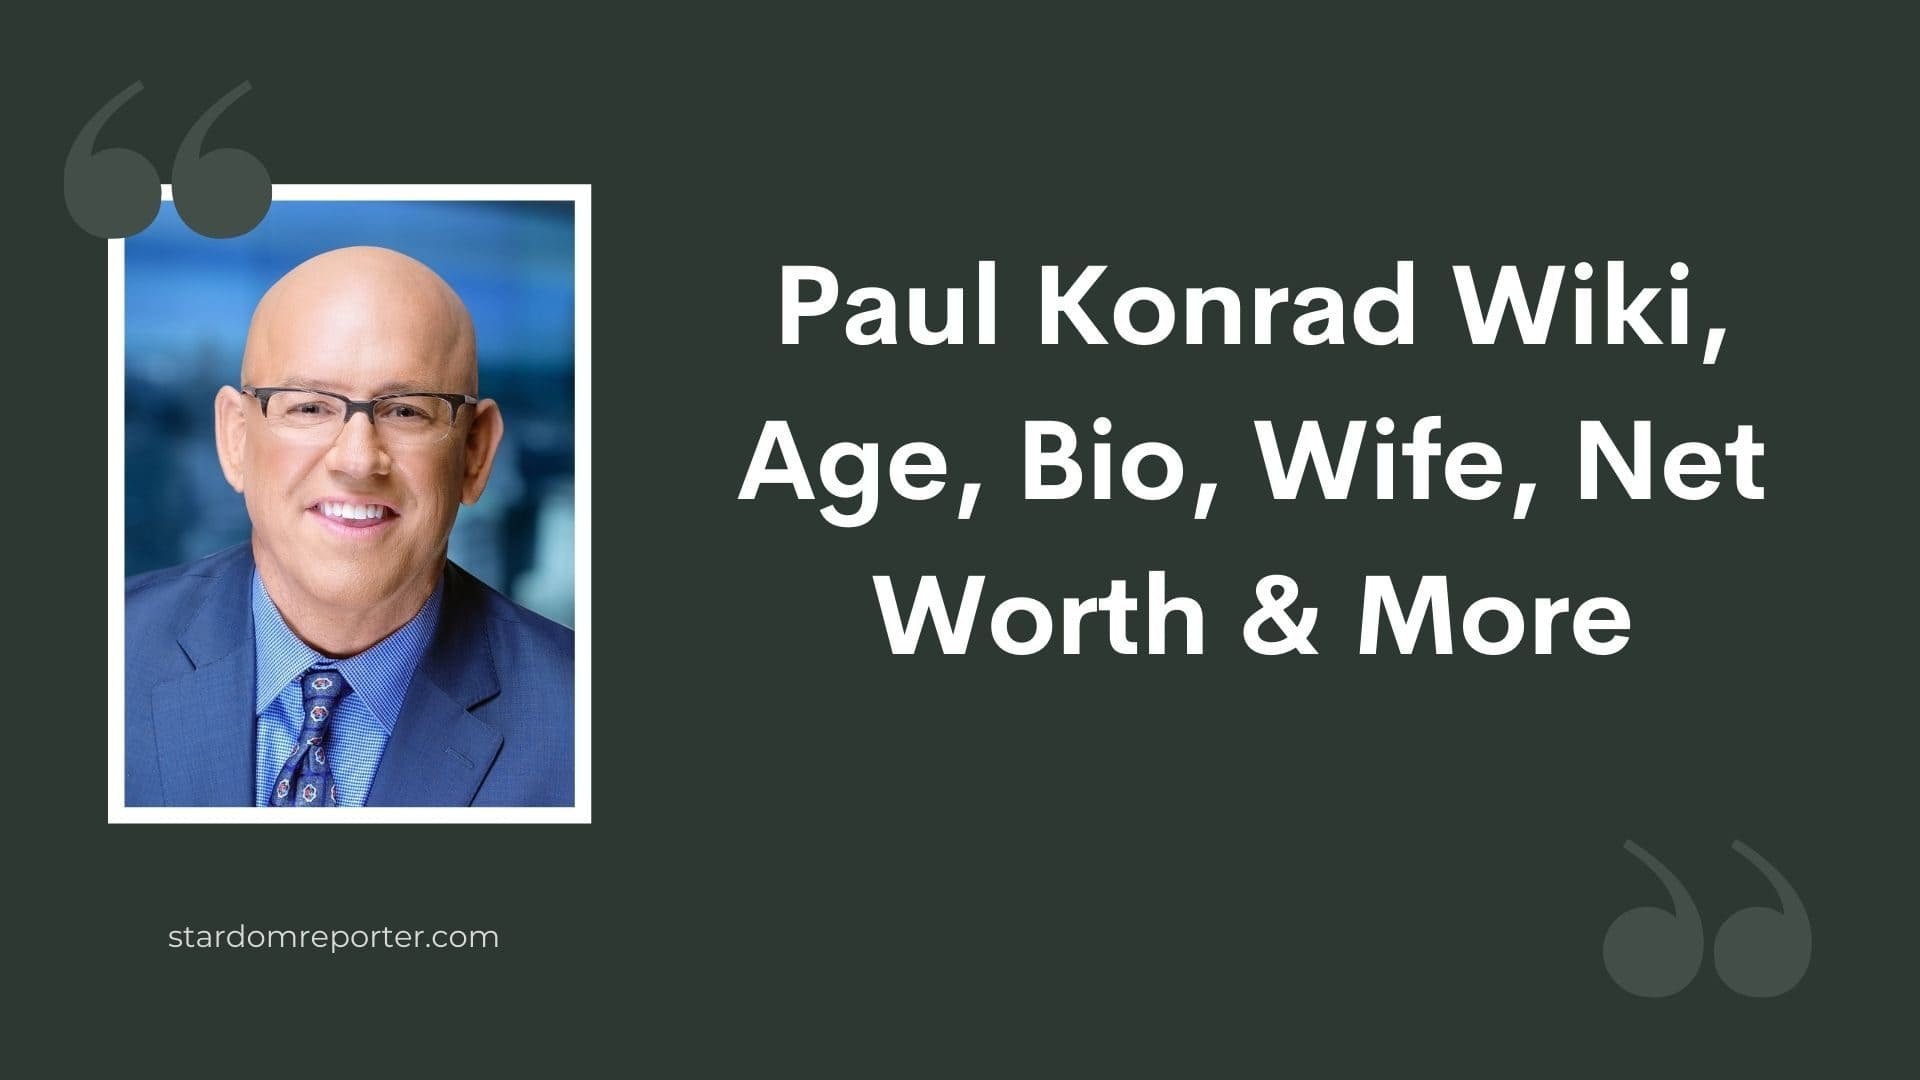 Paul Konrad Wiki, Age, Bio, Wife, Net Worth & More - 51